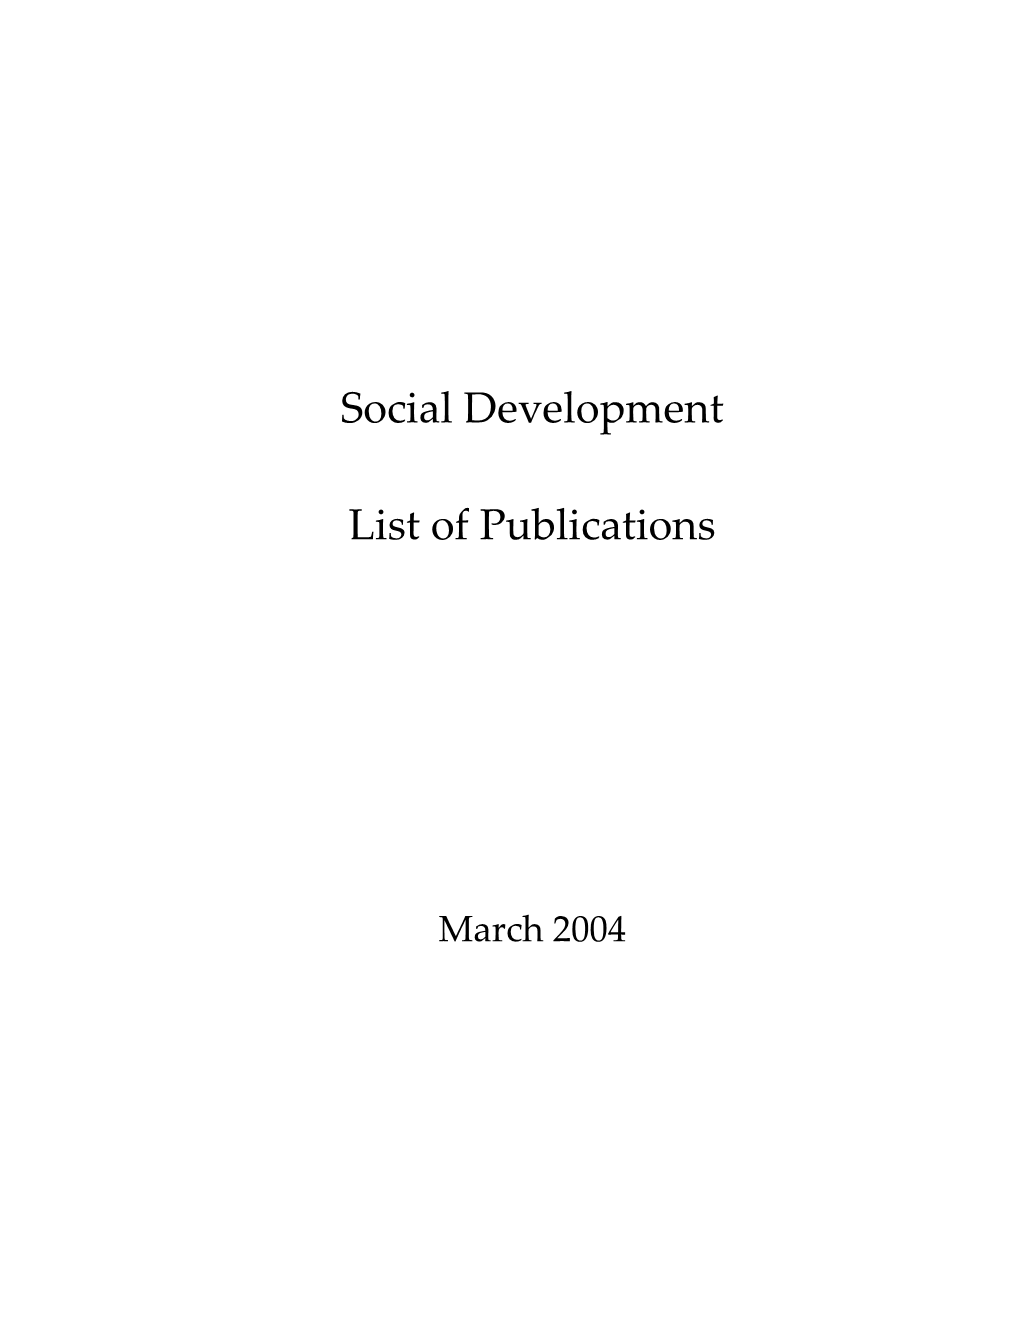 Social Development Papers